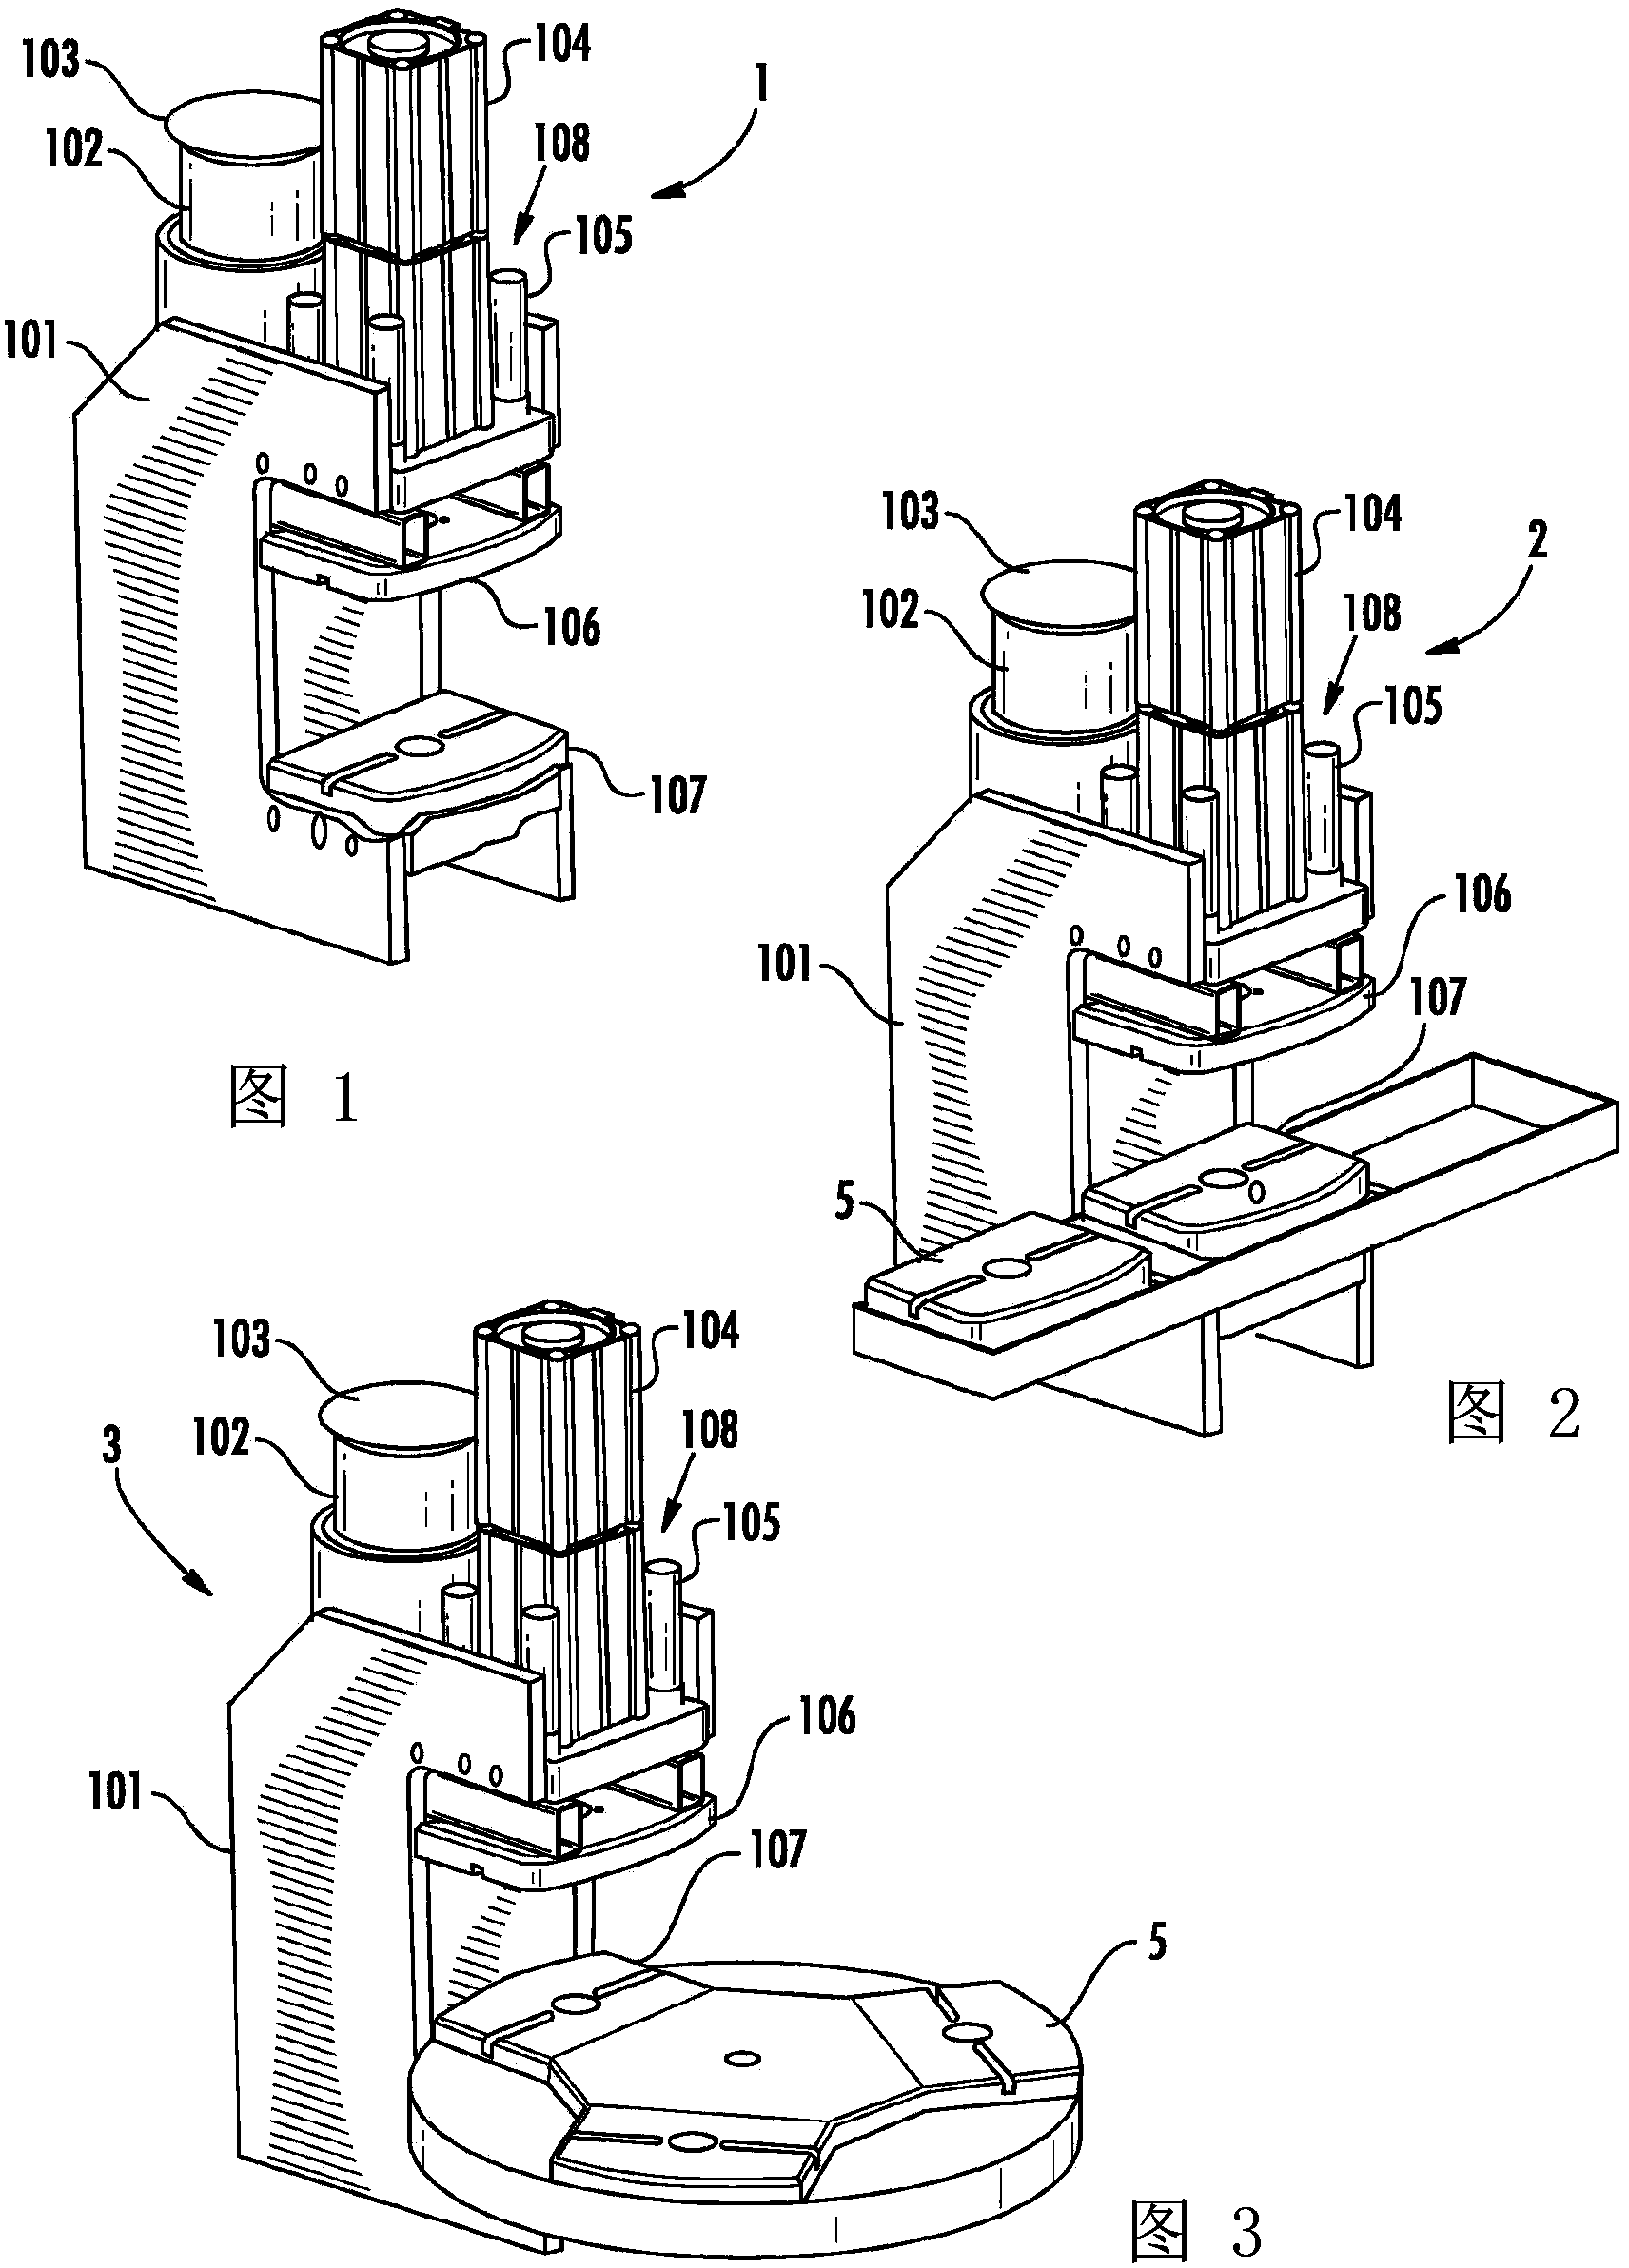 Molding apparatus